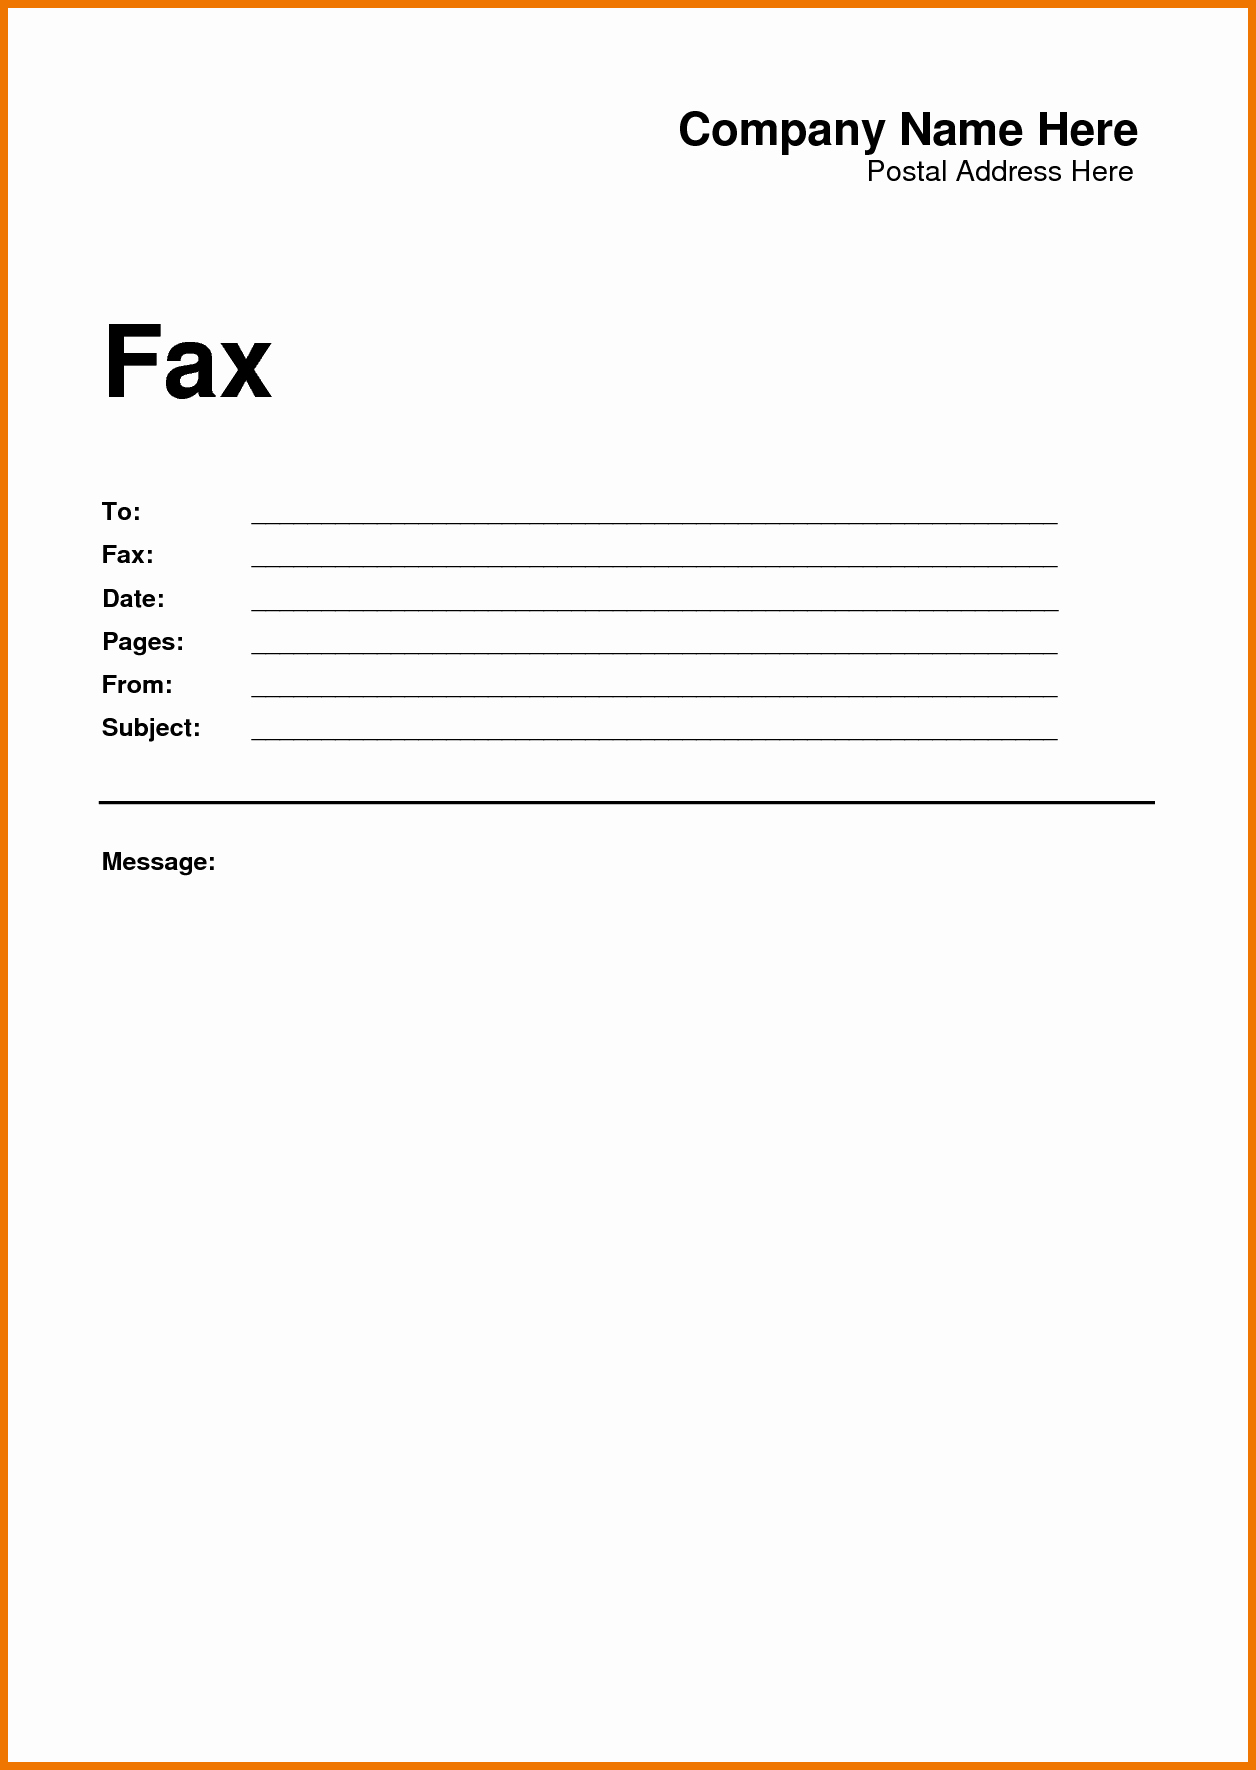 Free Fax Cover Sheet Templates Fresh Microsoft Fice Fax Template Portablegasgrillweber